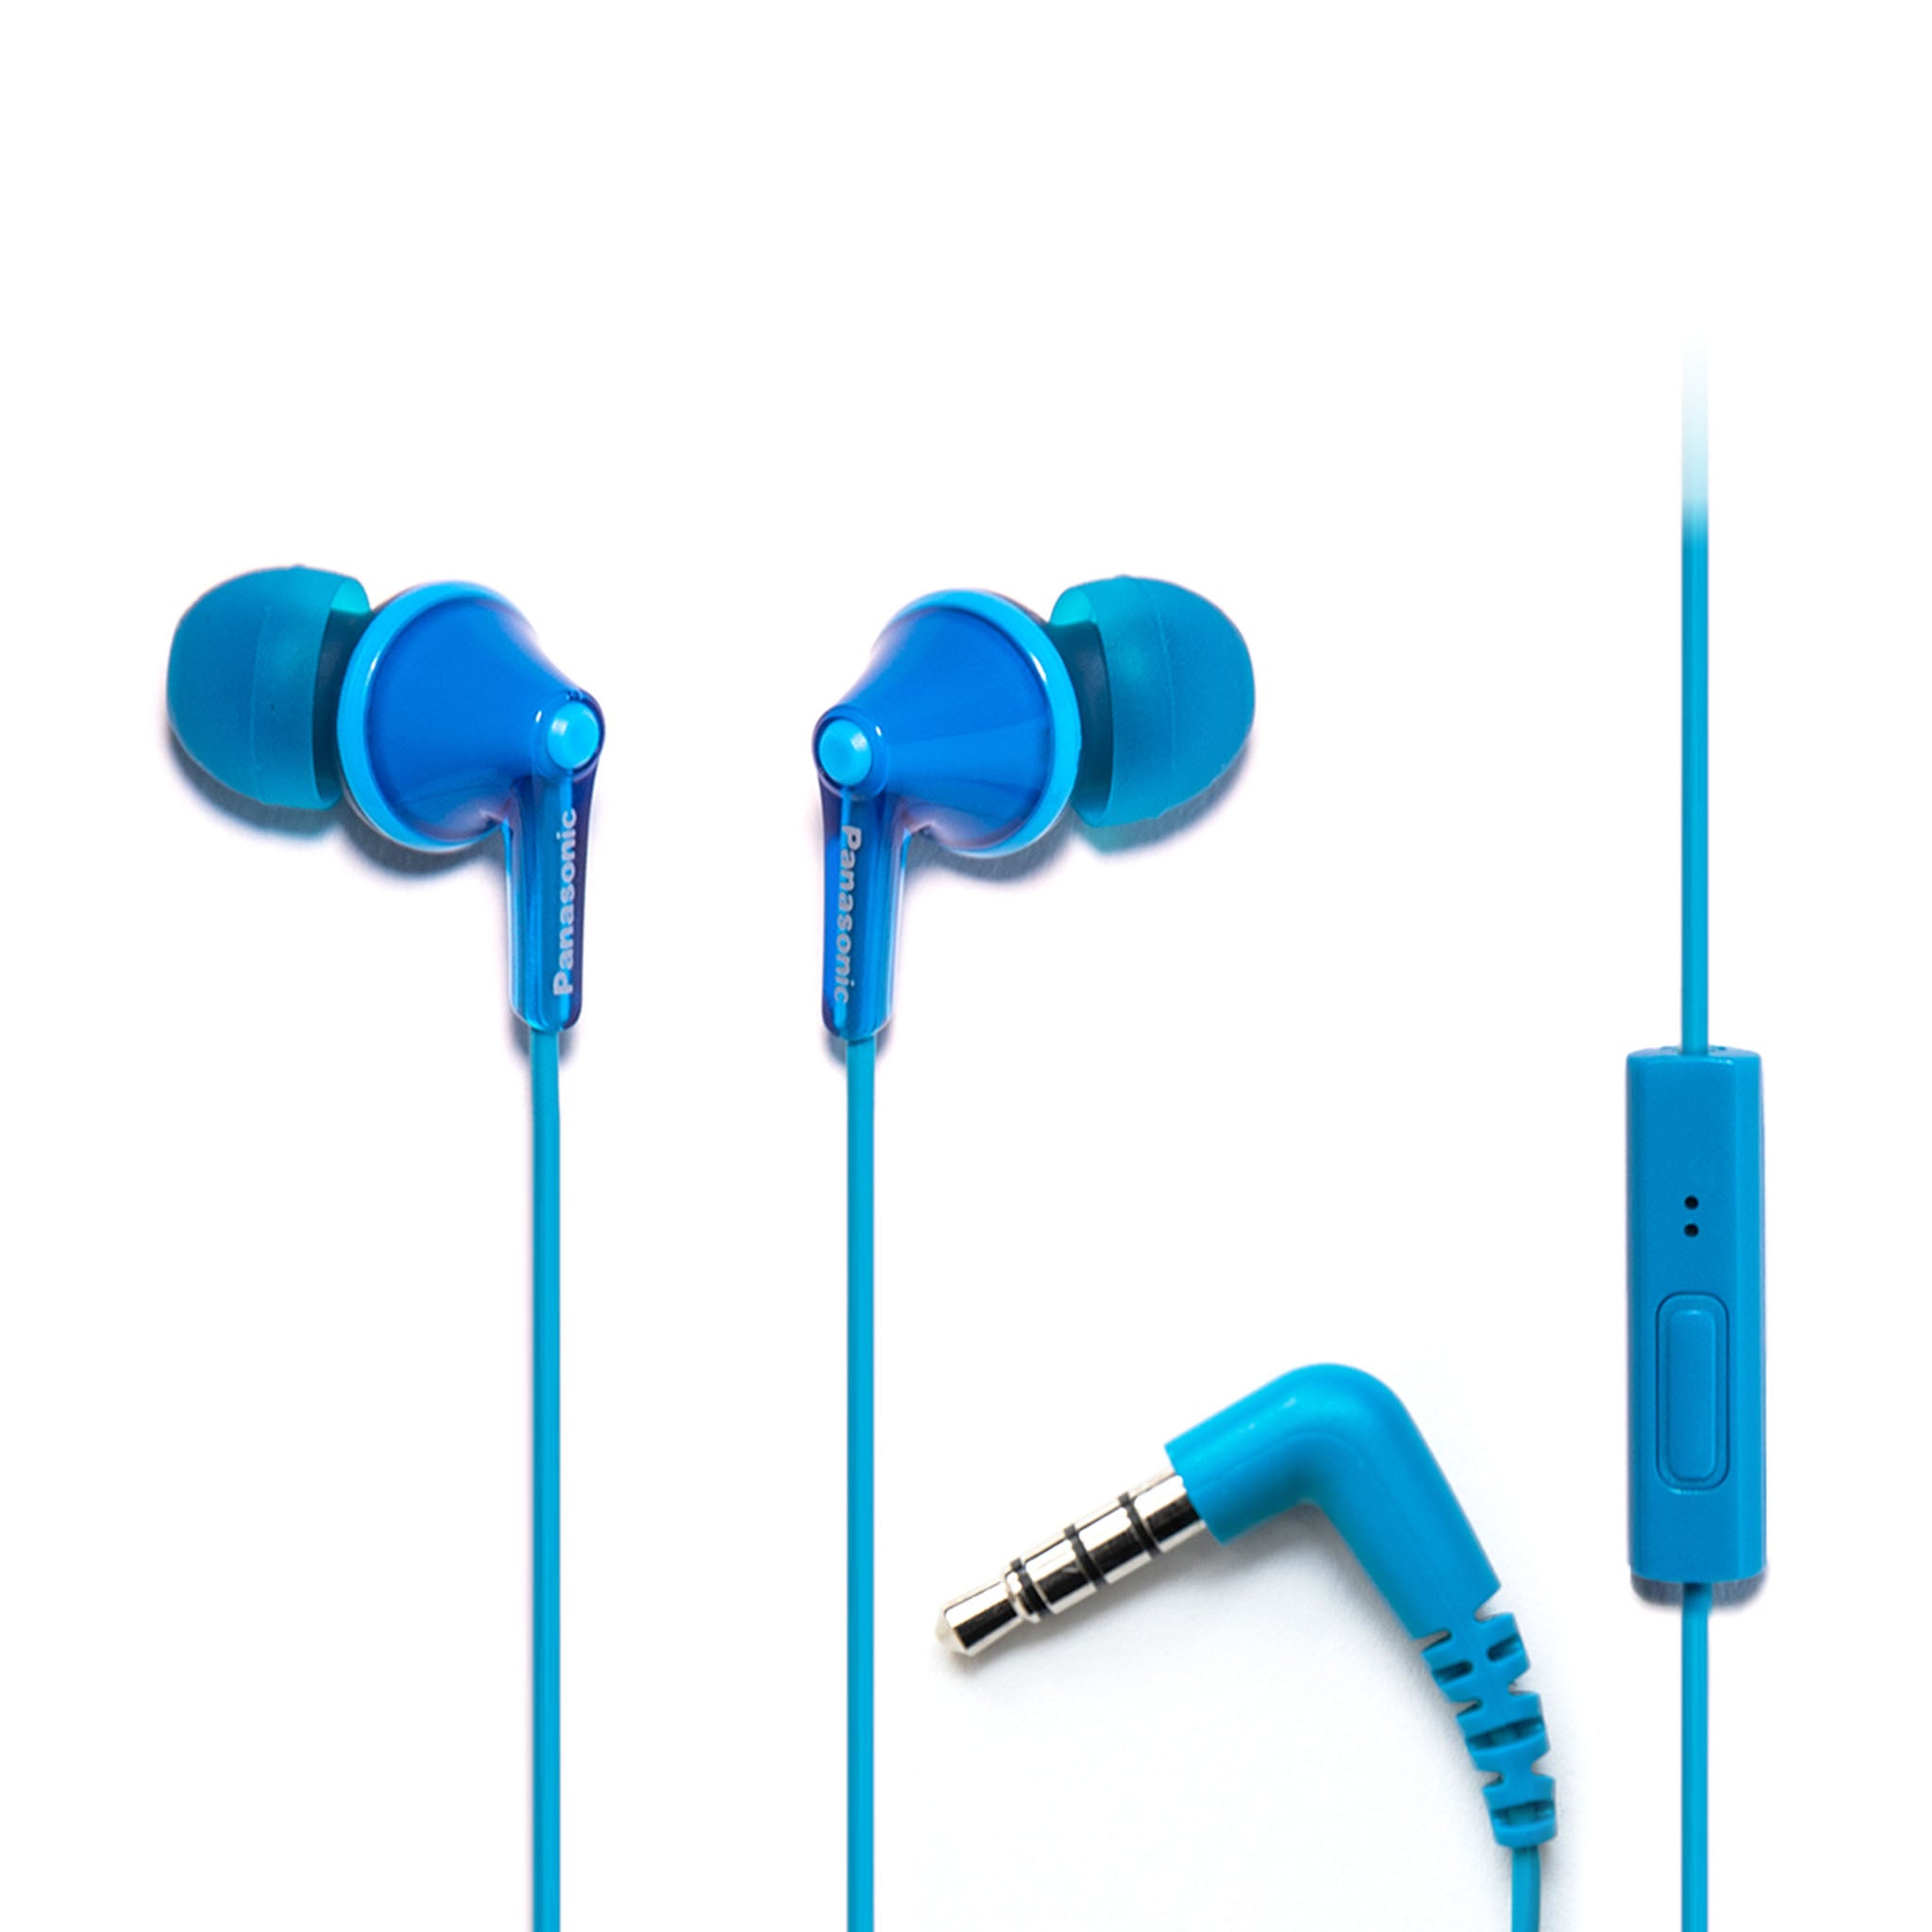 Panasonic ErgoFit In-Ear Earbud Headphones with Microphone - RP-TCM125